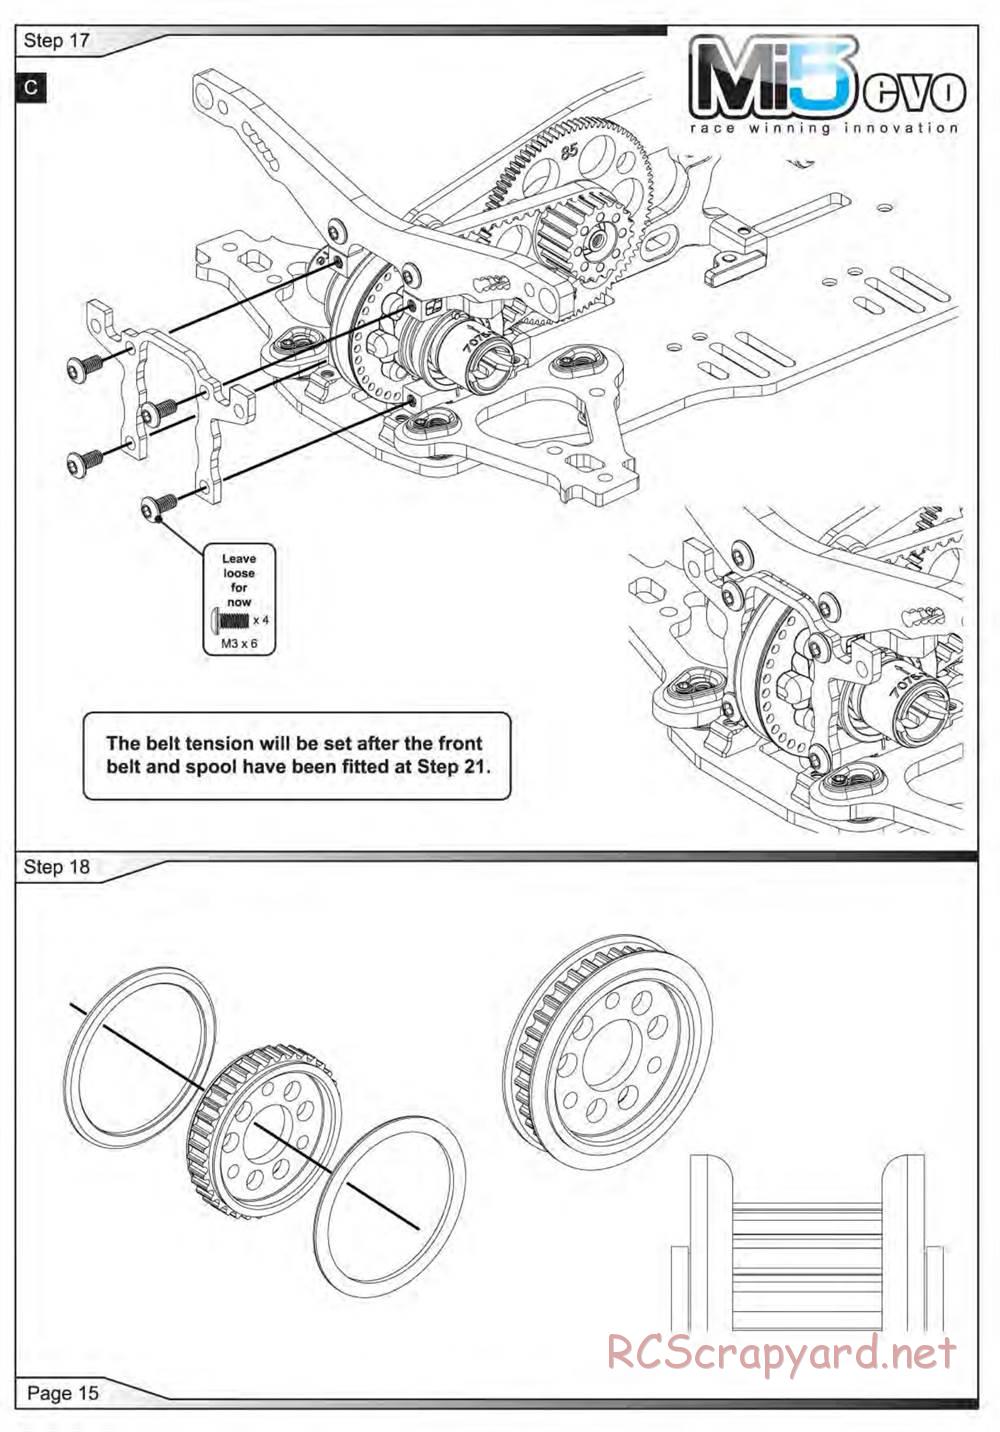 Schumacher - Mi5 Evo - Manual - Page 16